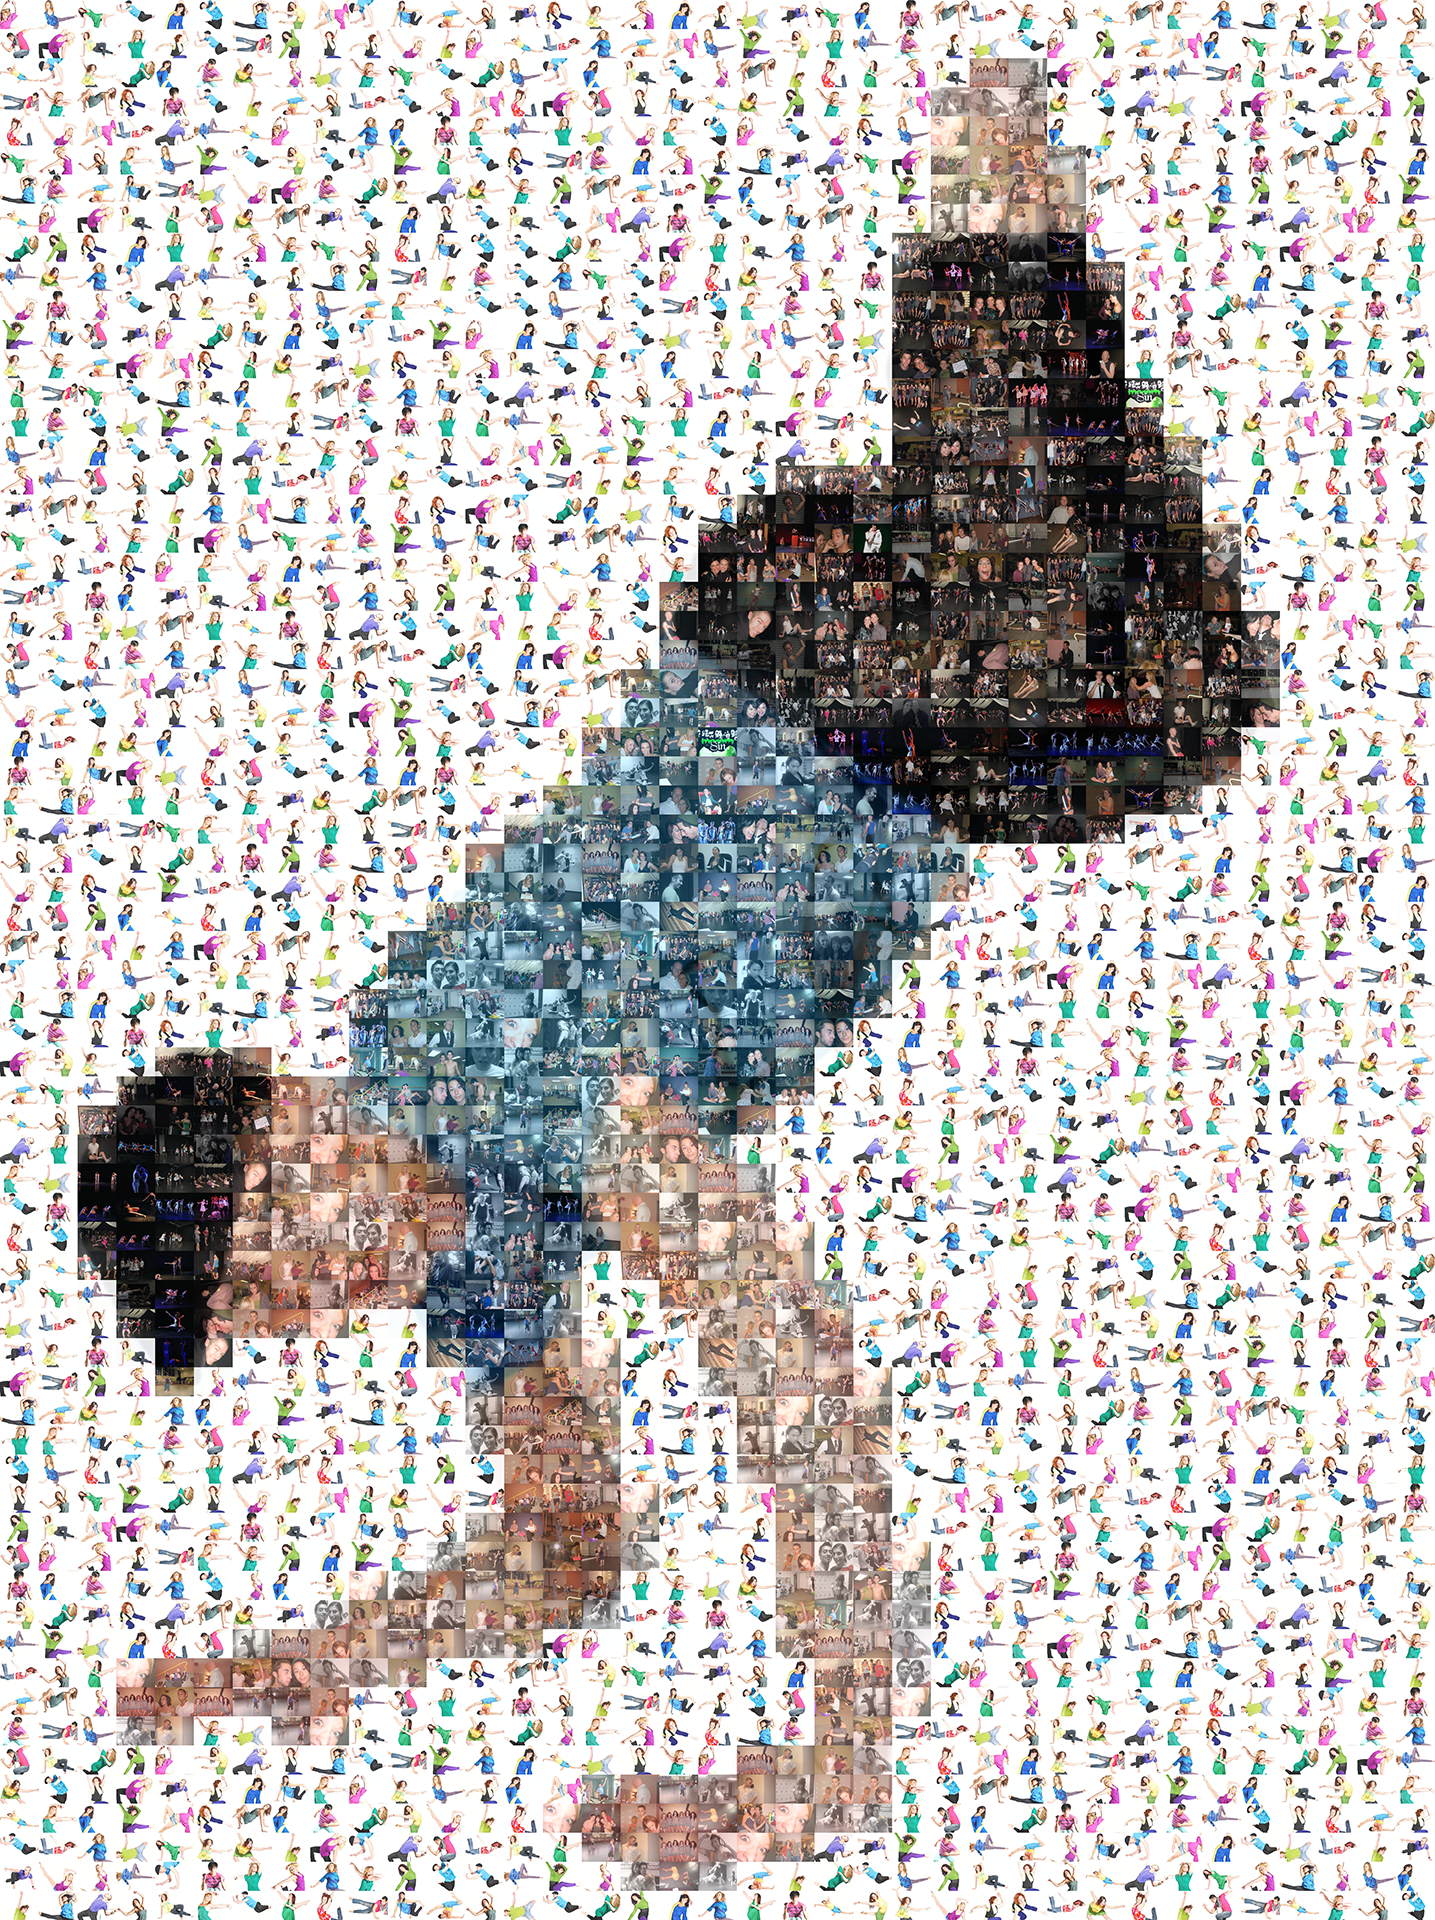 photo mosaic created using 303 photos of dancers